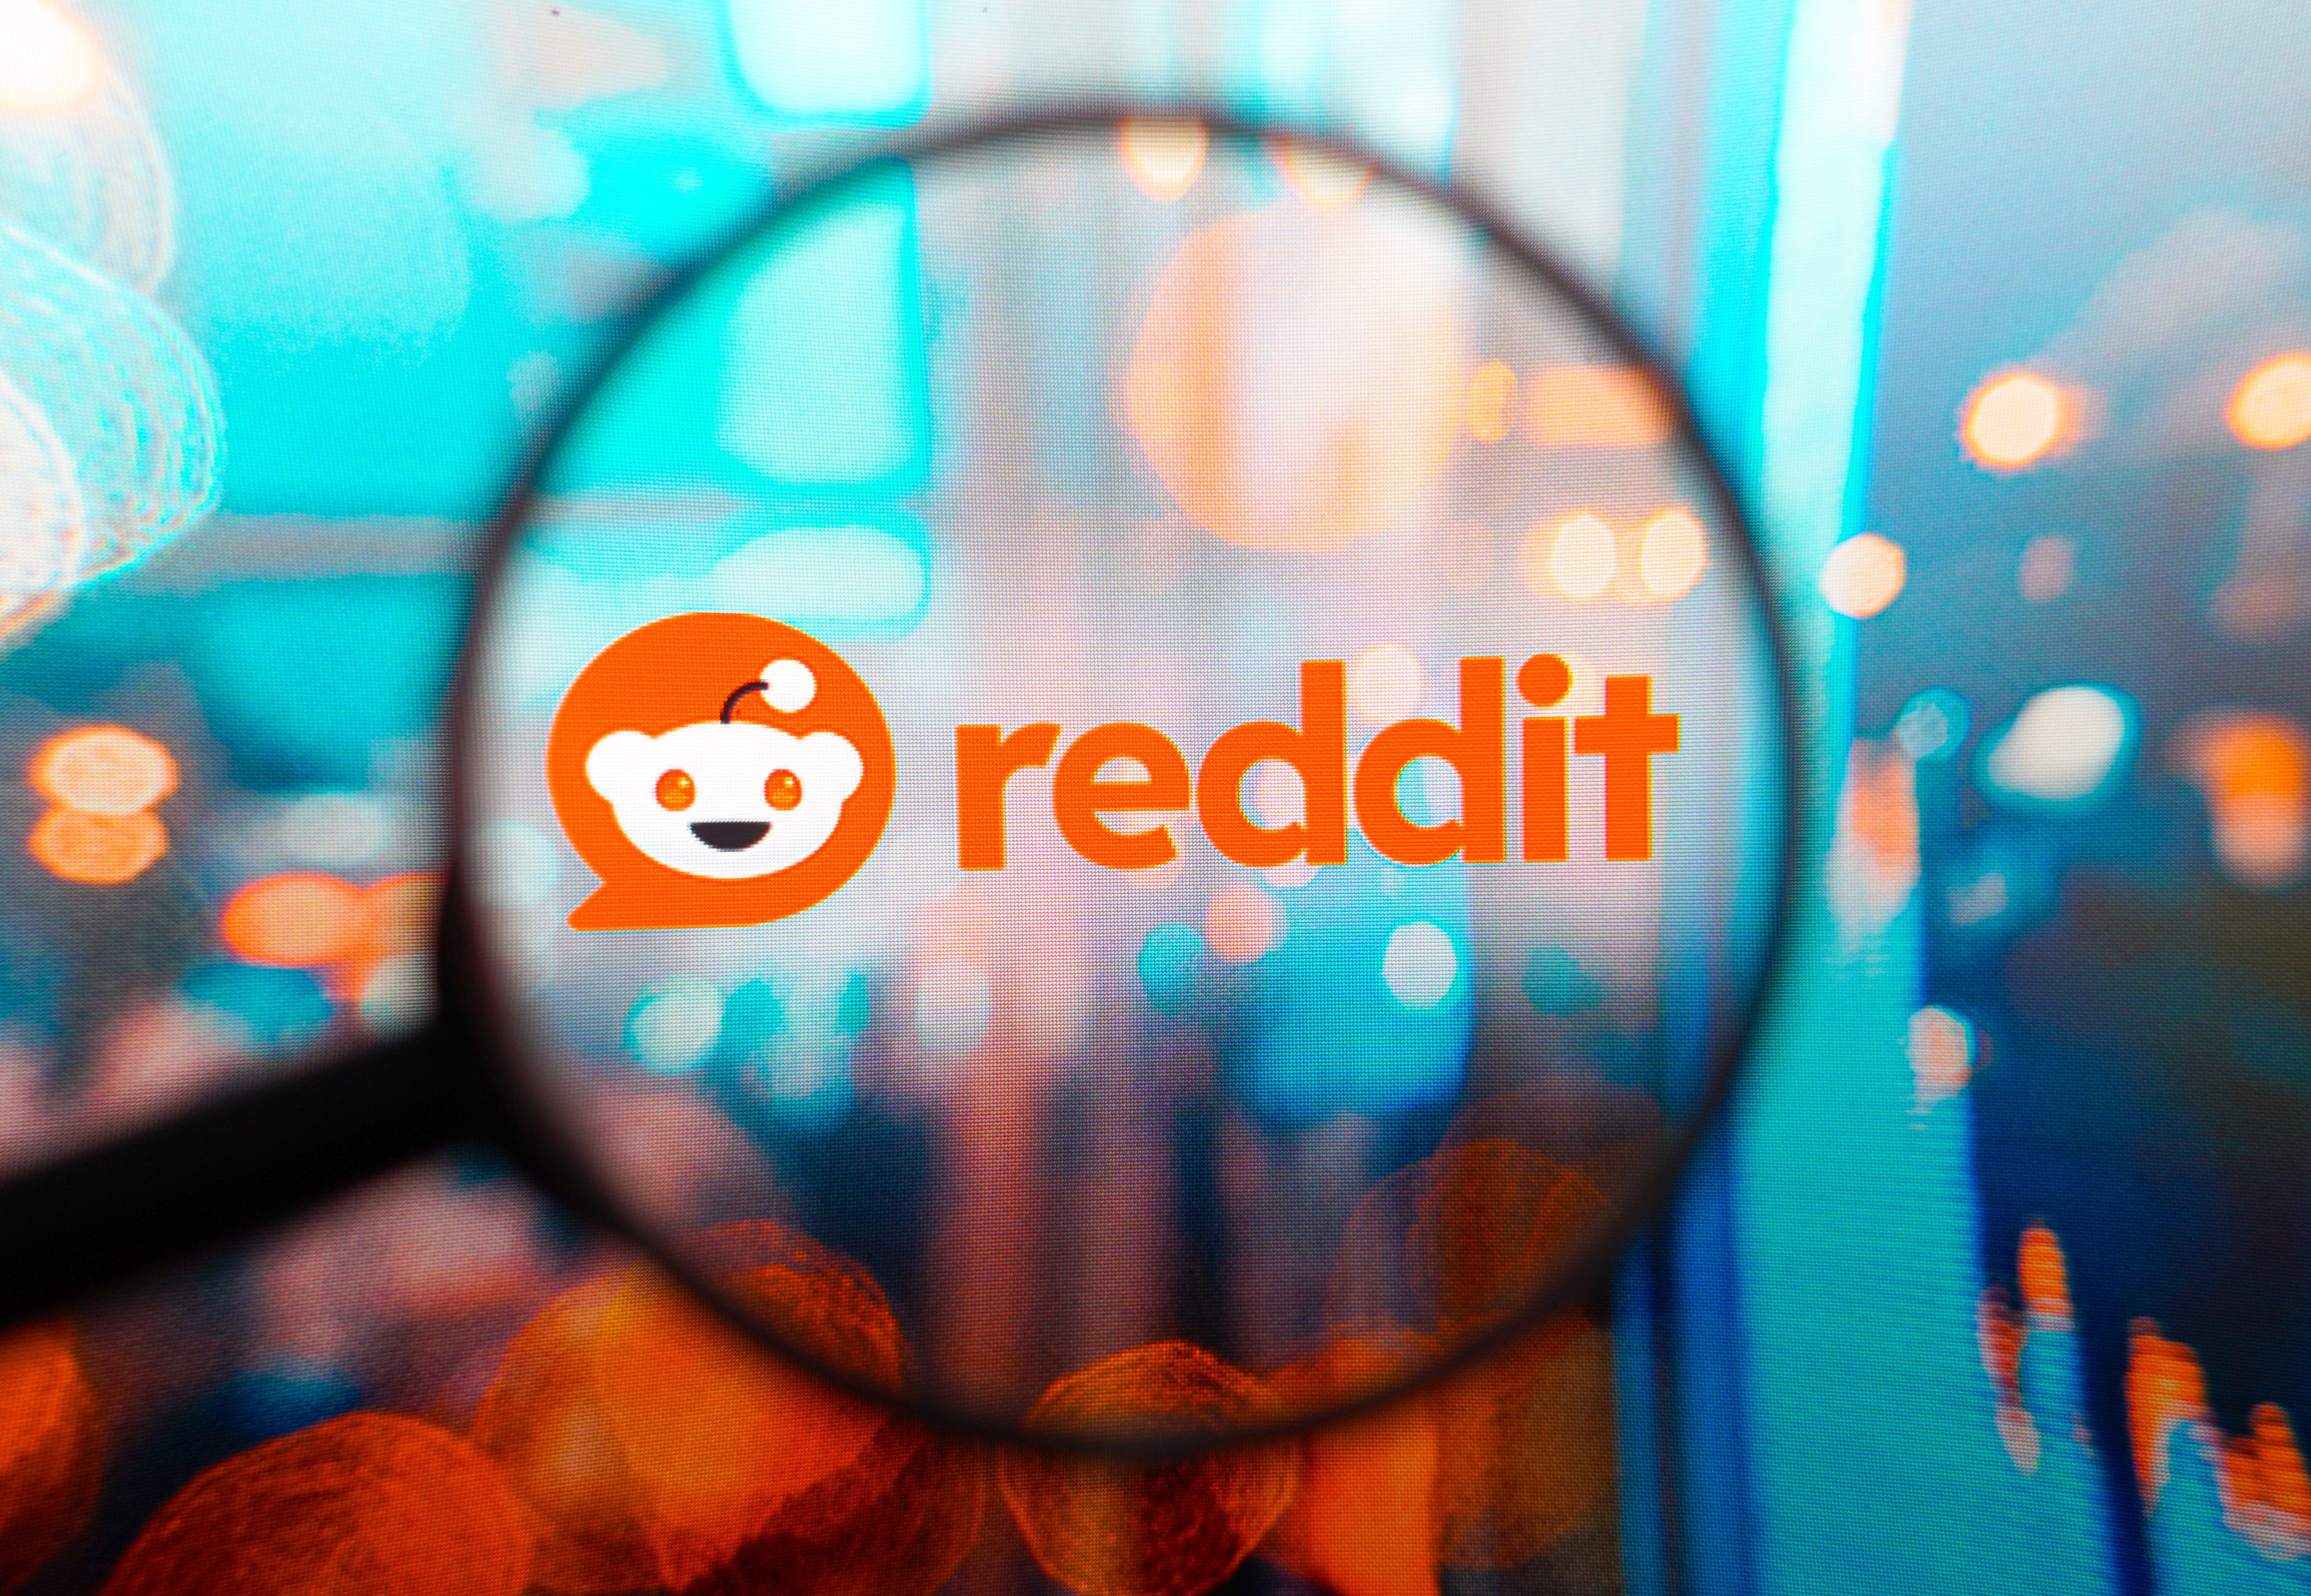 reddit logo under magnifying glass